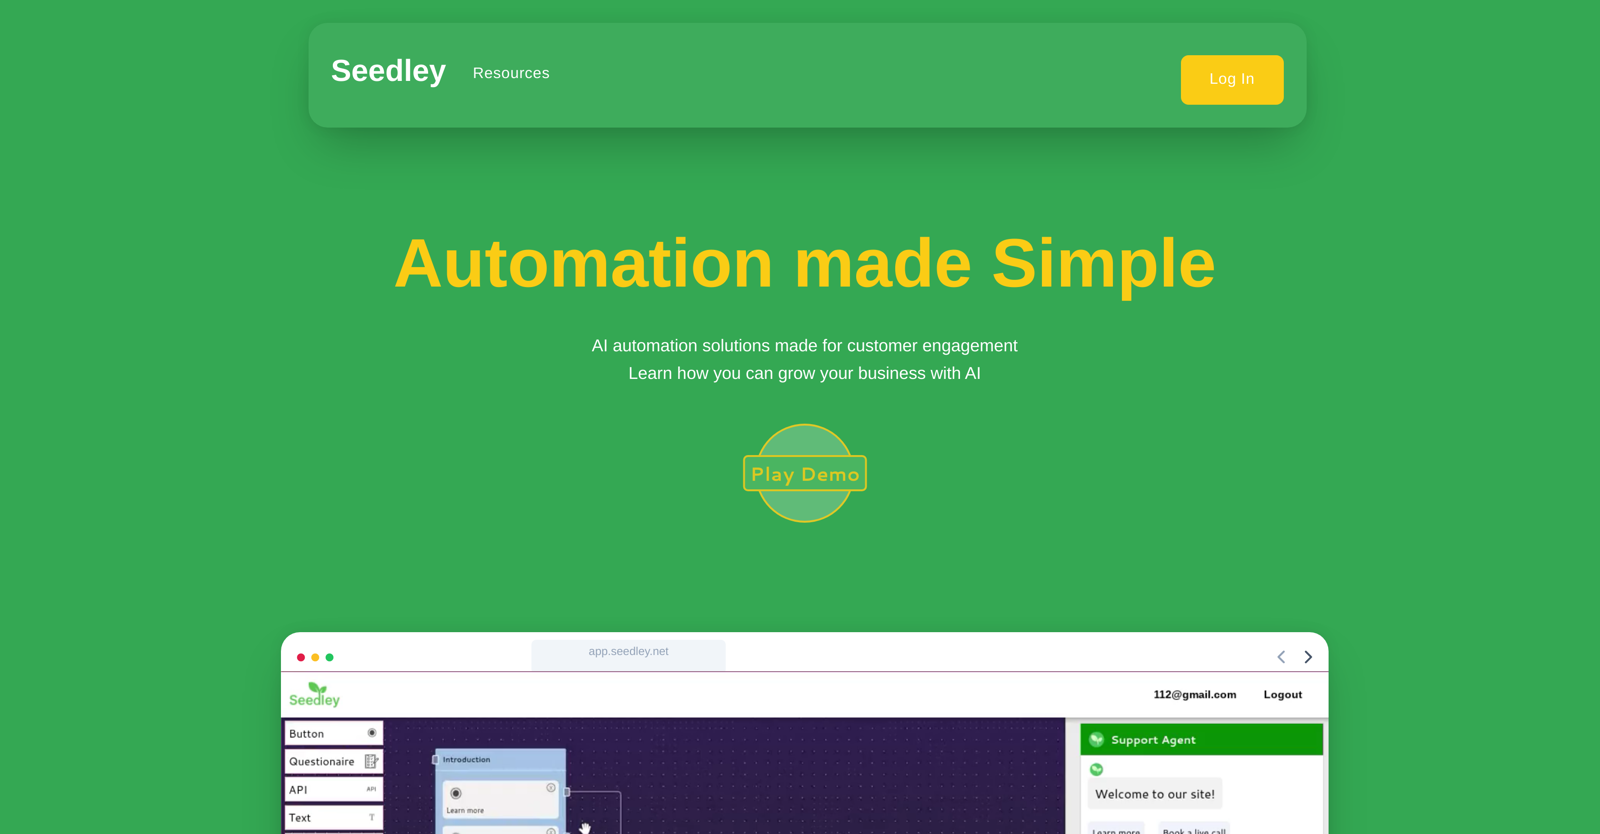 Seedley website